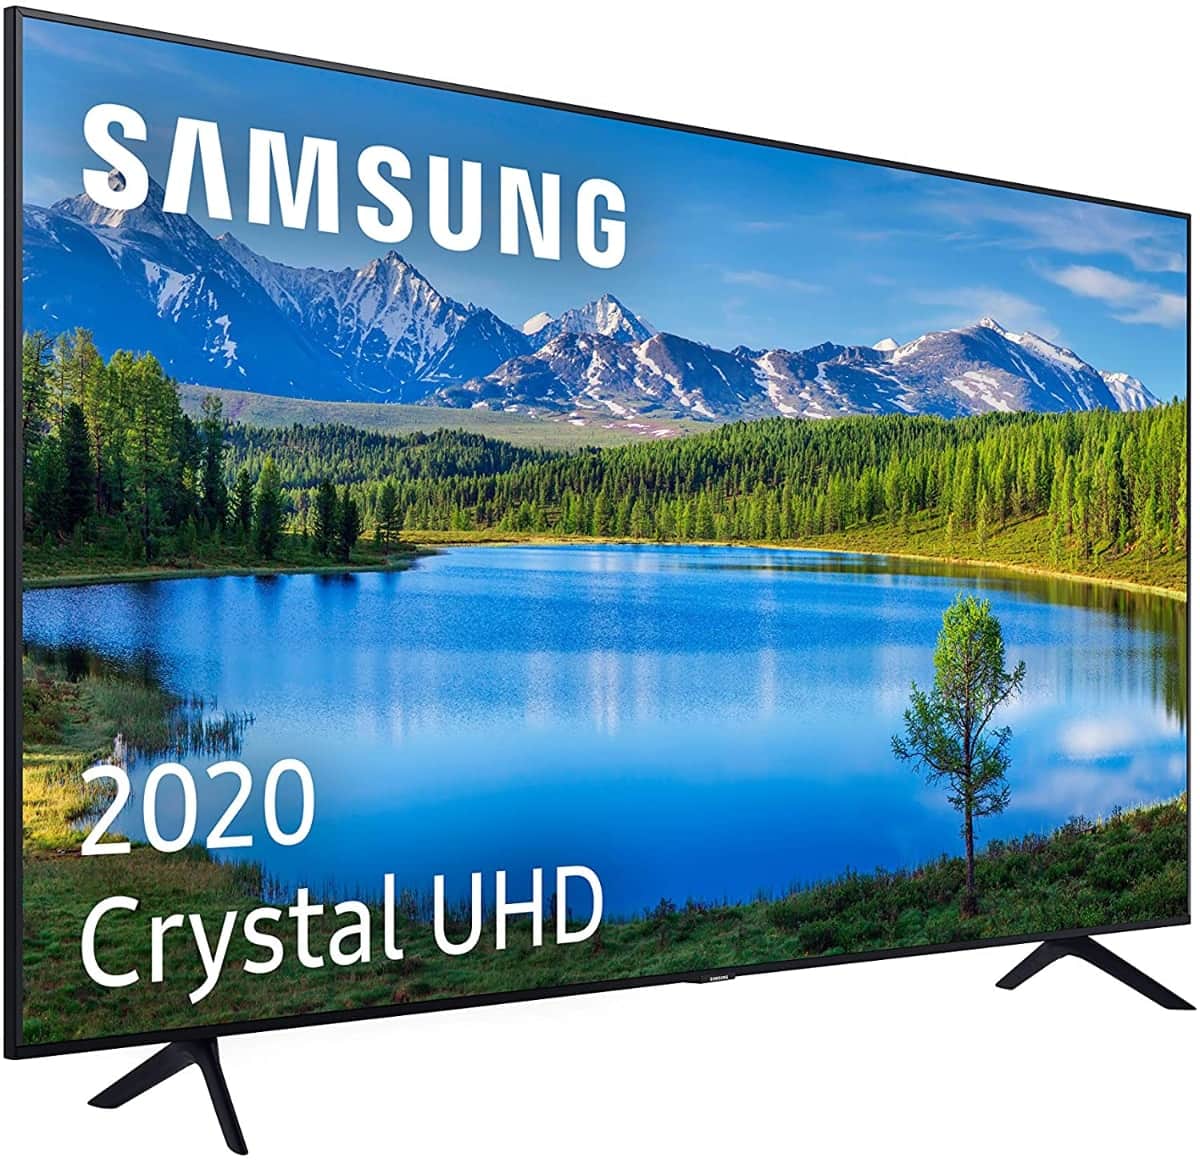 Samsung Crystal UHD 2020 43TU7095 - Smart TV de 43", 4K, HDR 10+, Procesador 4K